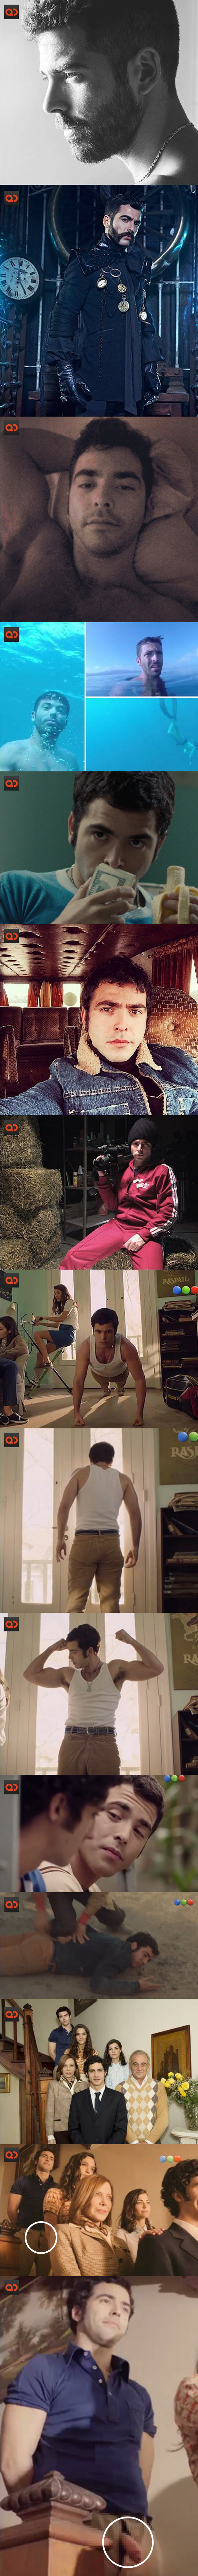 Nazareno Casero, Argentine Actor, Pees On Camera And Exposes His Cock In Tv Series “Historia De Un Clan”!